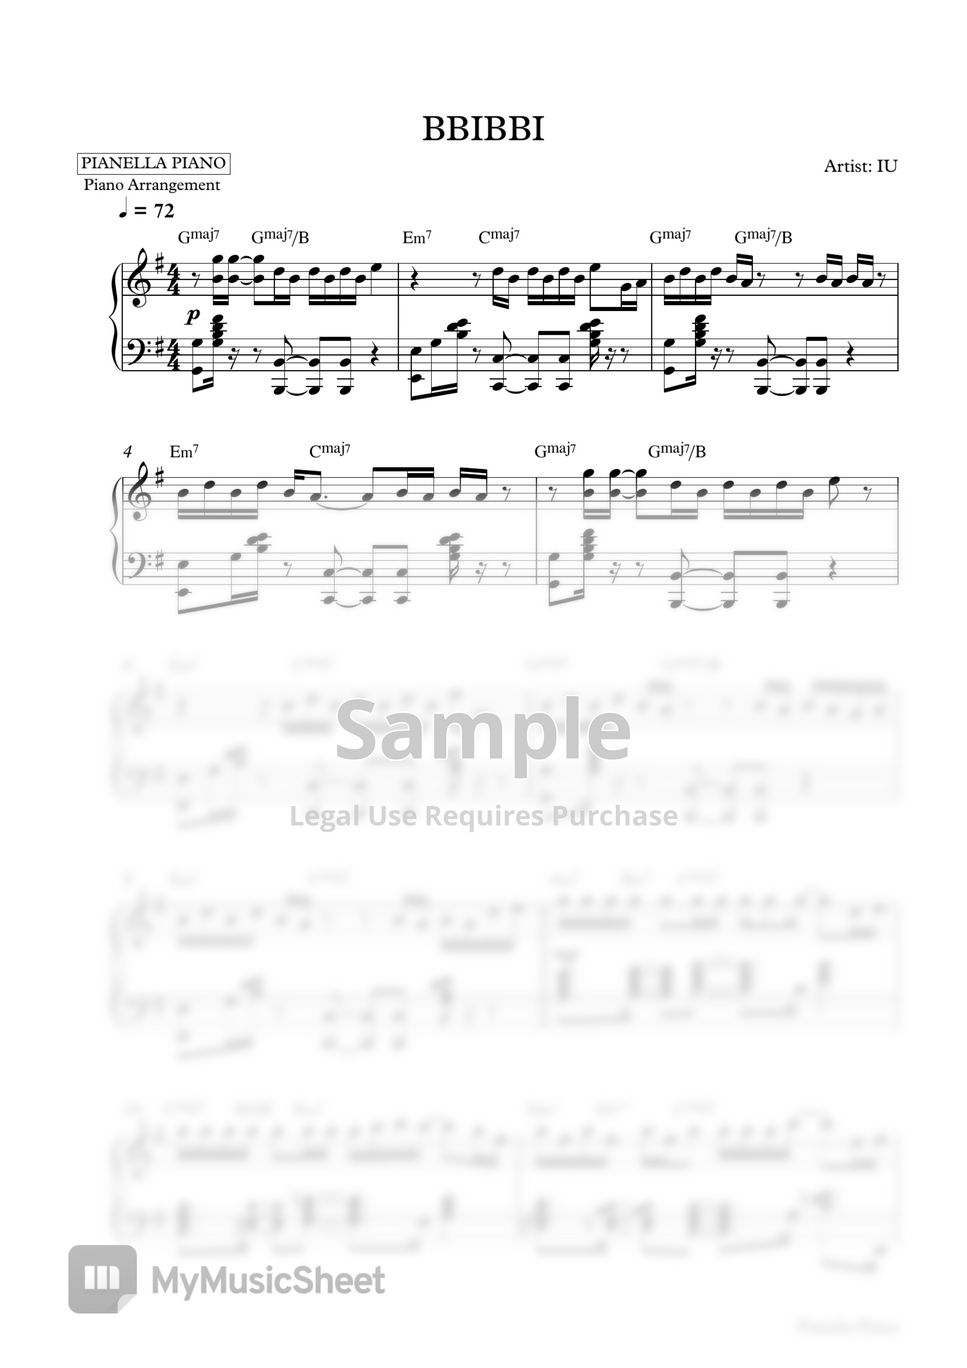 IU - BBIBBI (Piano Sheet) by Pianella Piano